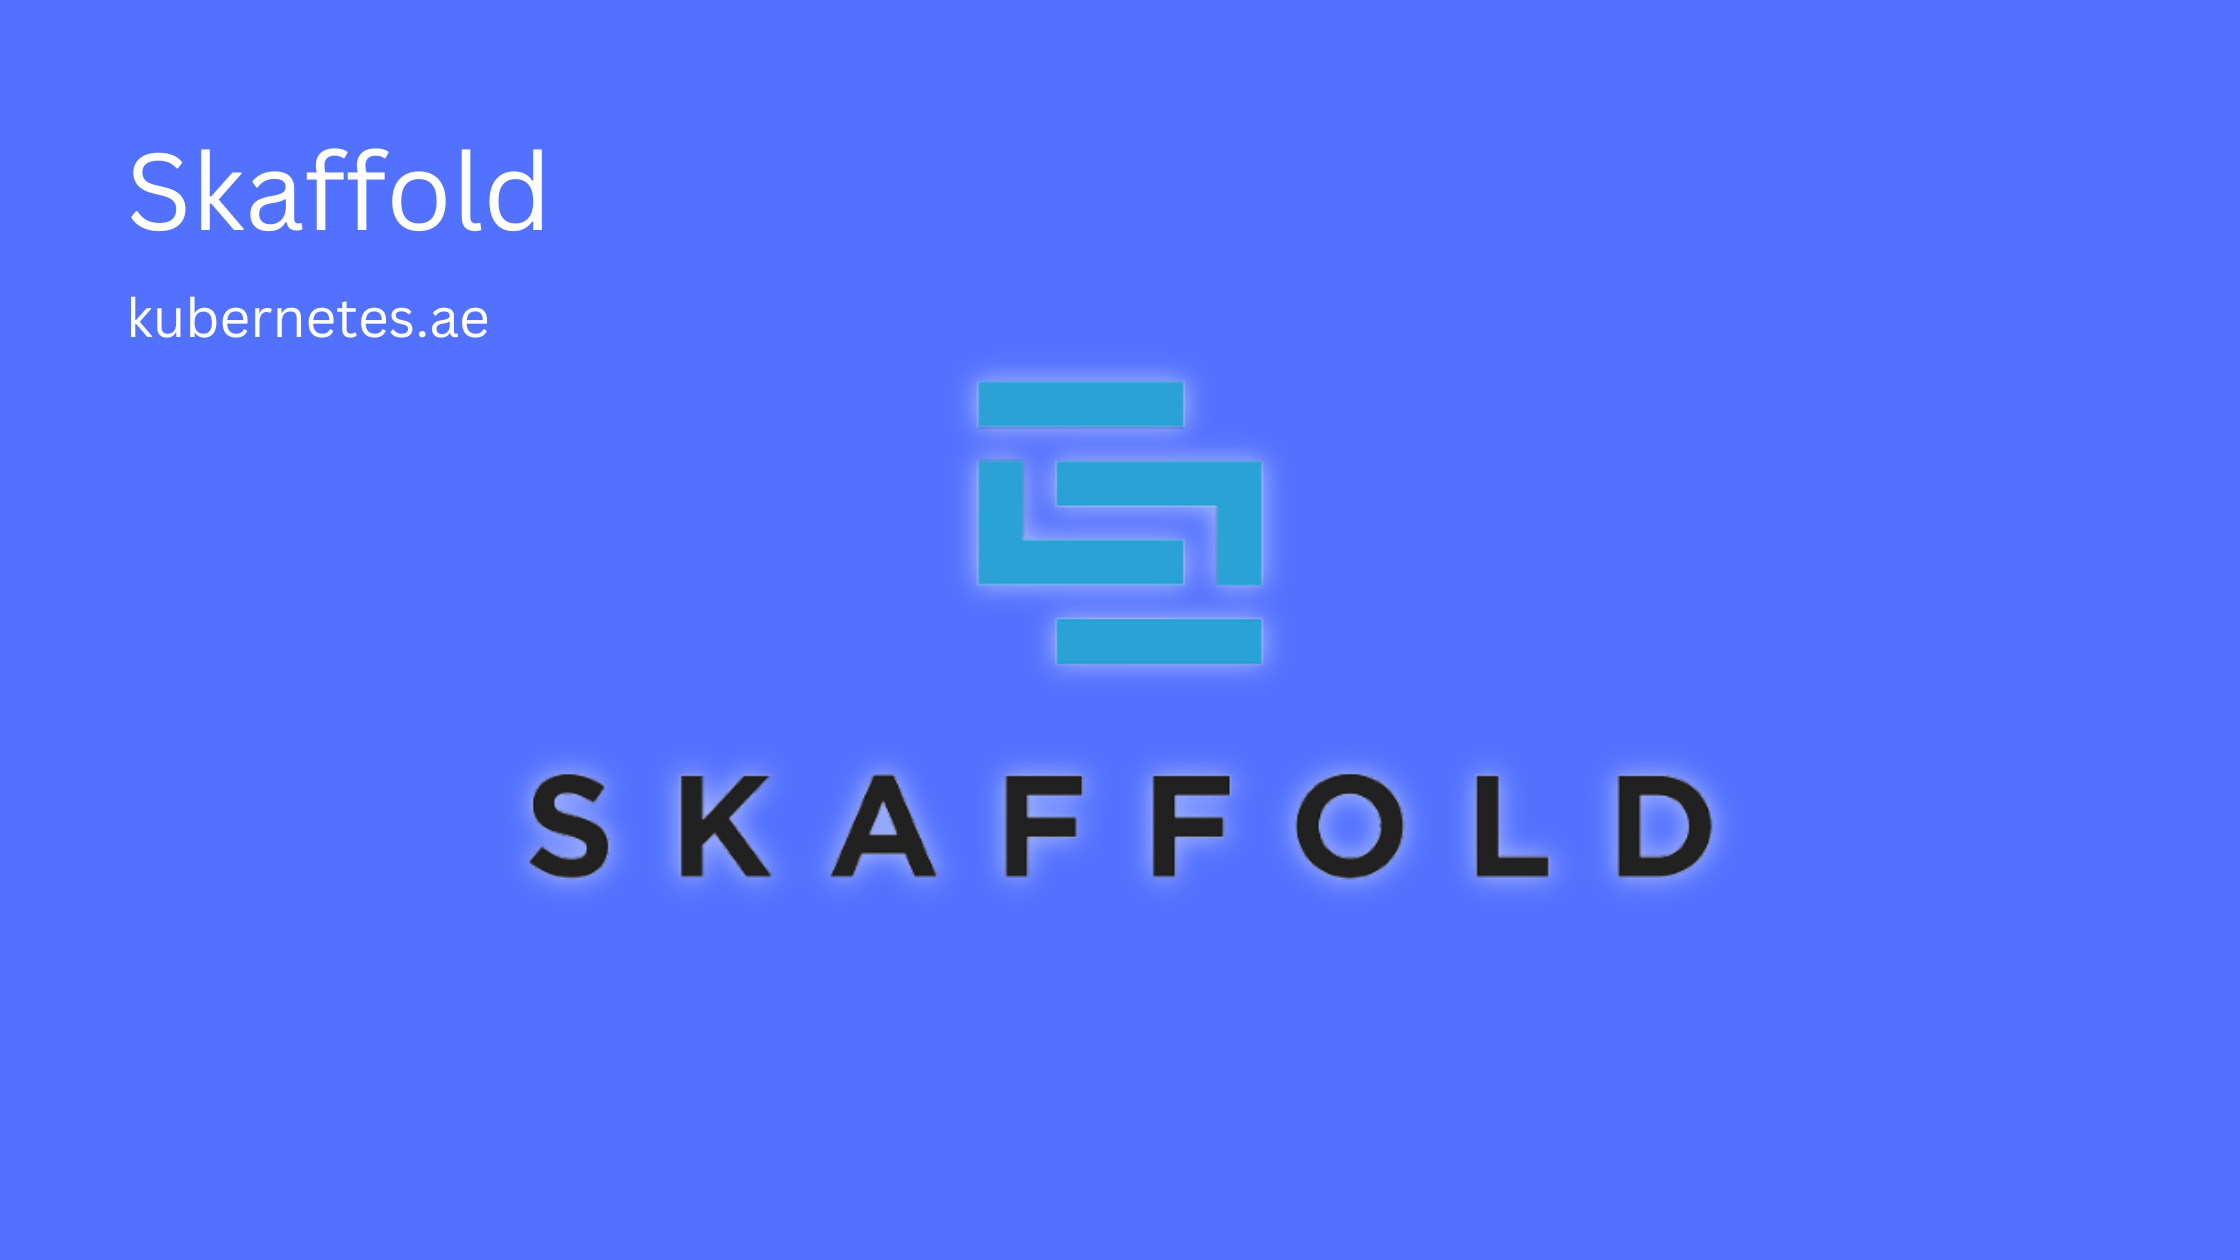 Introducing Skaffold